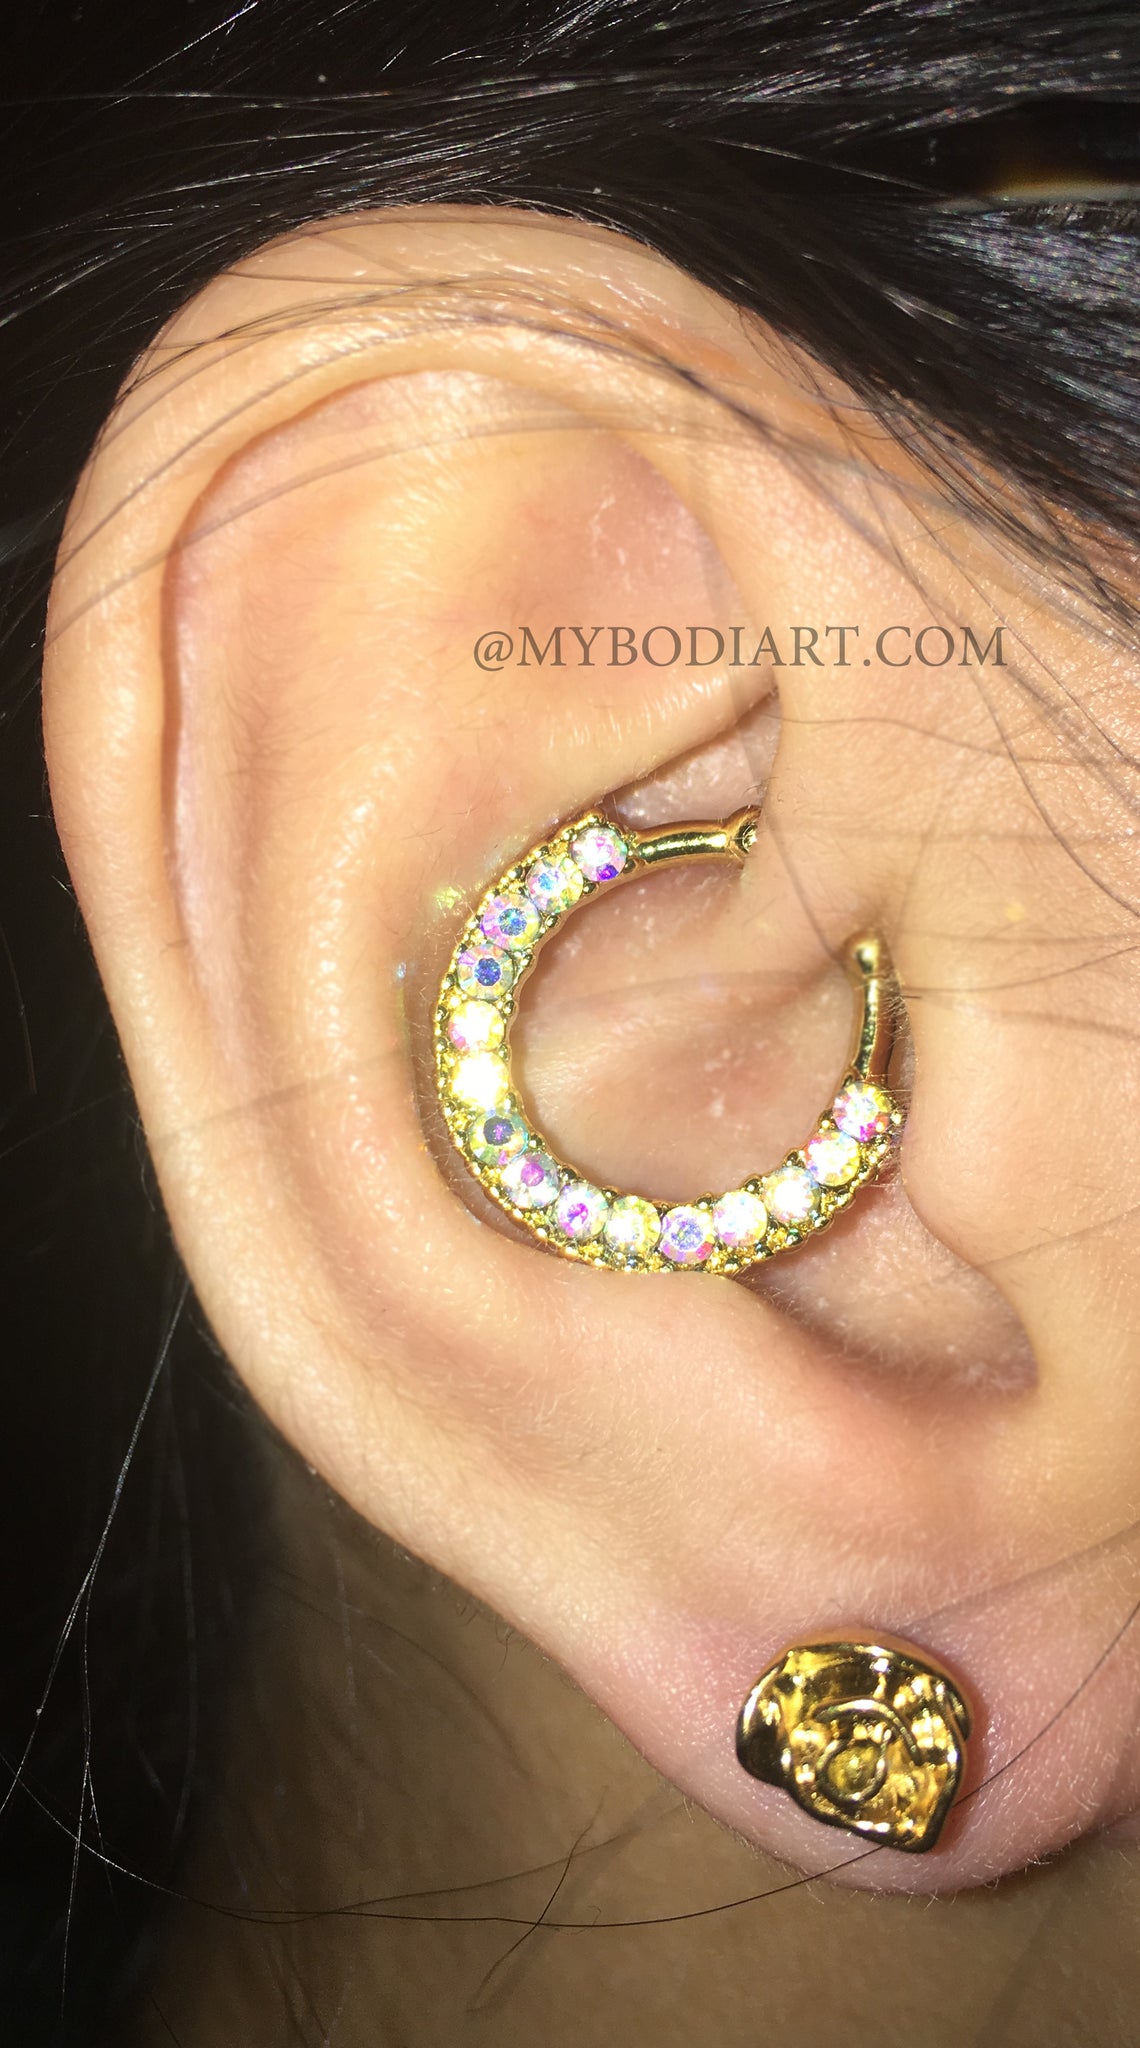 Popular Teenager Ear Piercing Ideas - Gold Daith Ring Hoop Earring - Rose Ear Lobe Stud - at MyBodiArt.com 